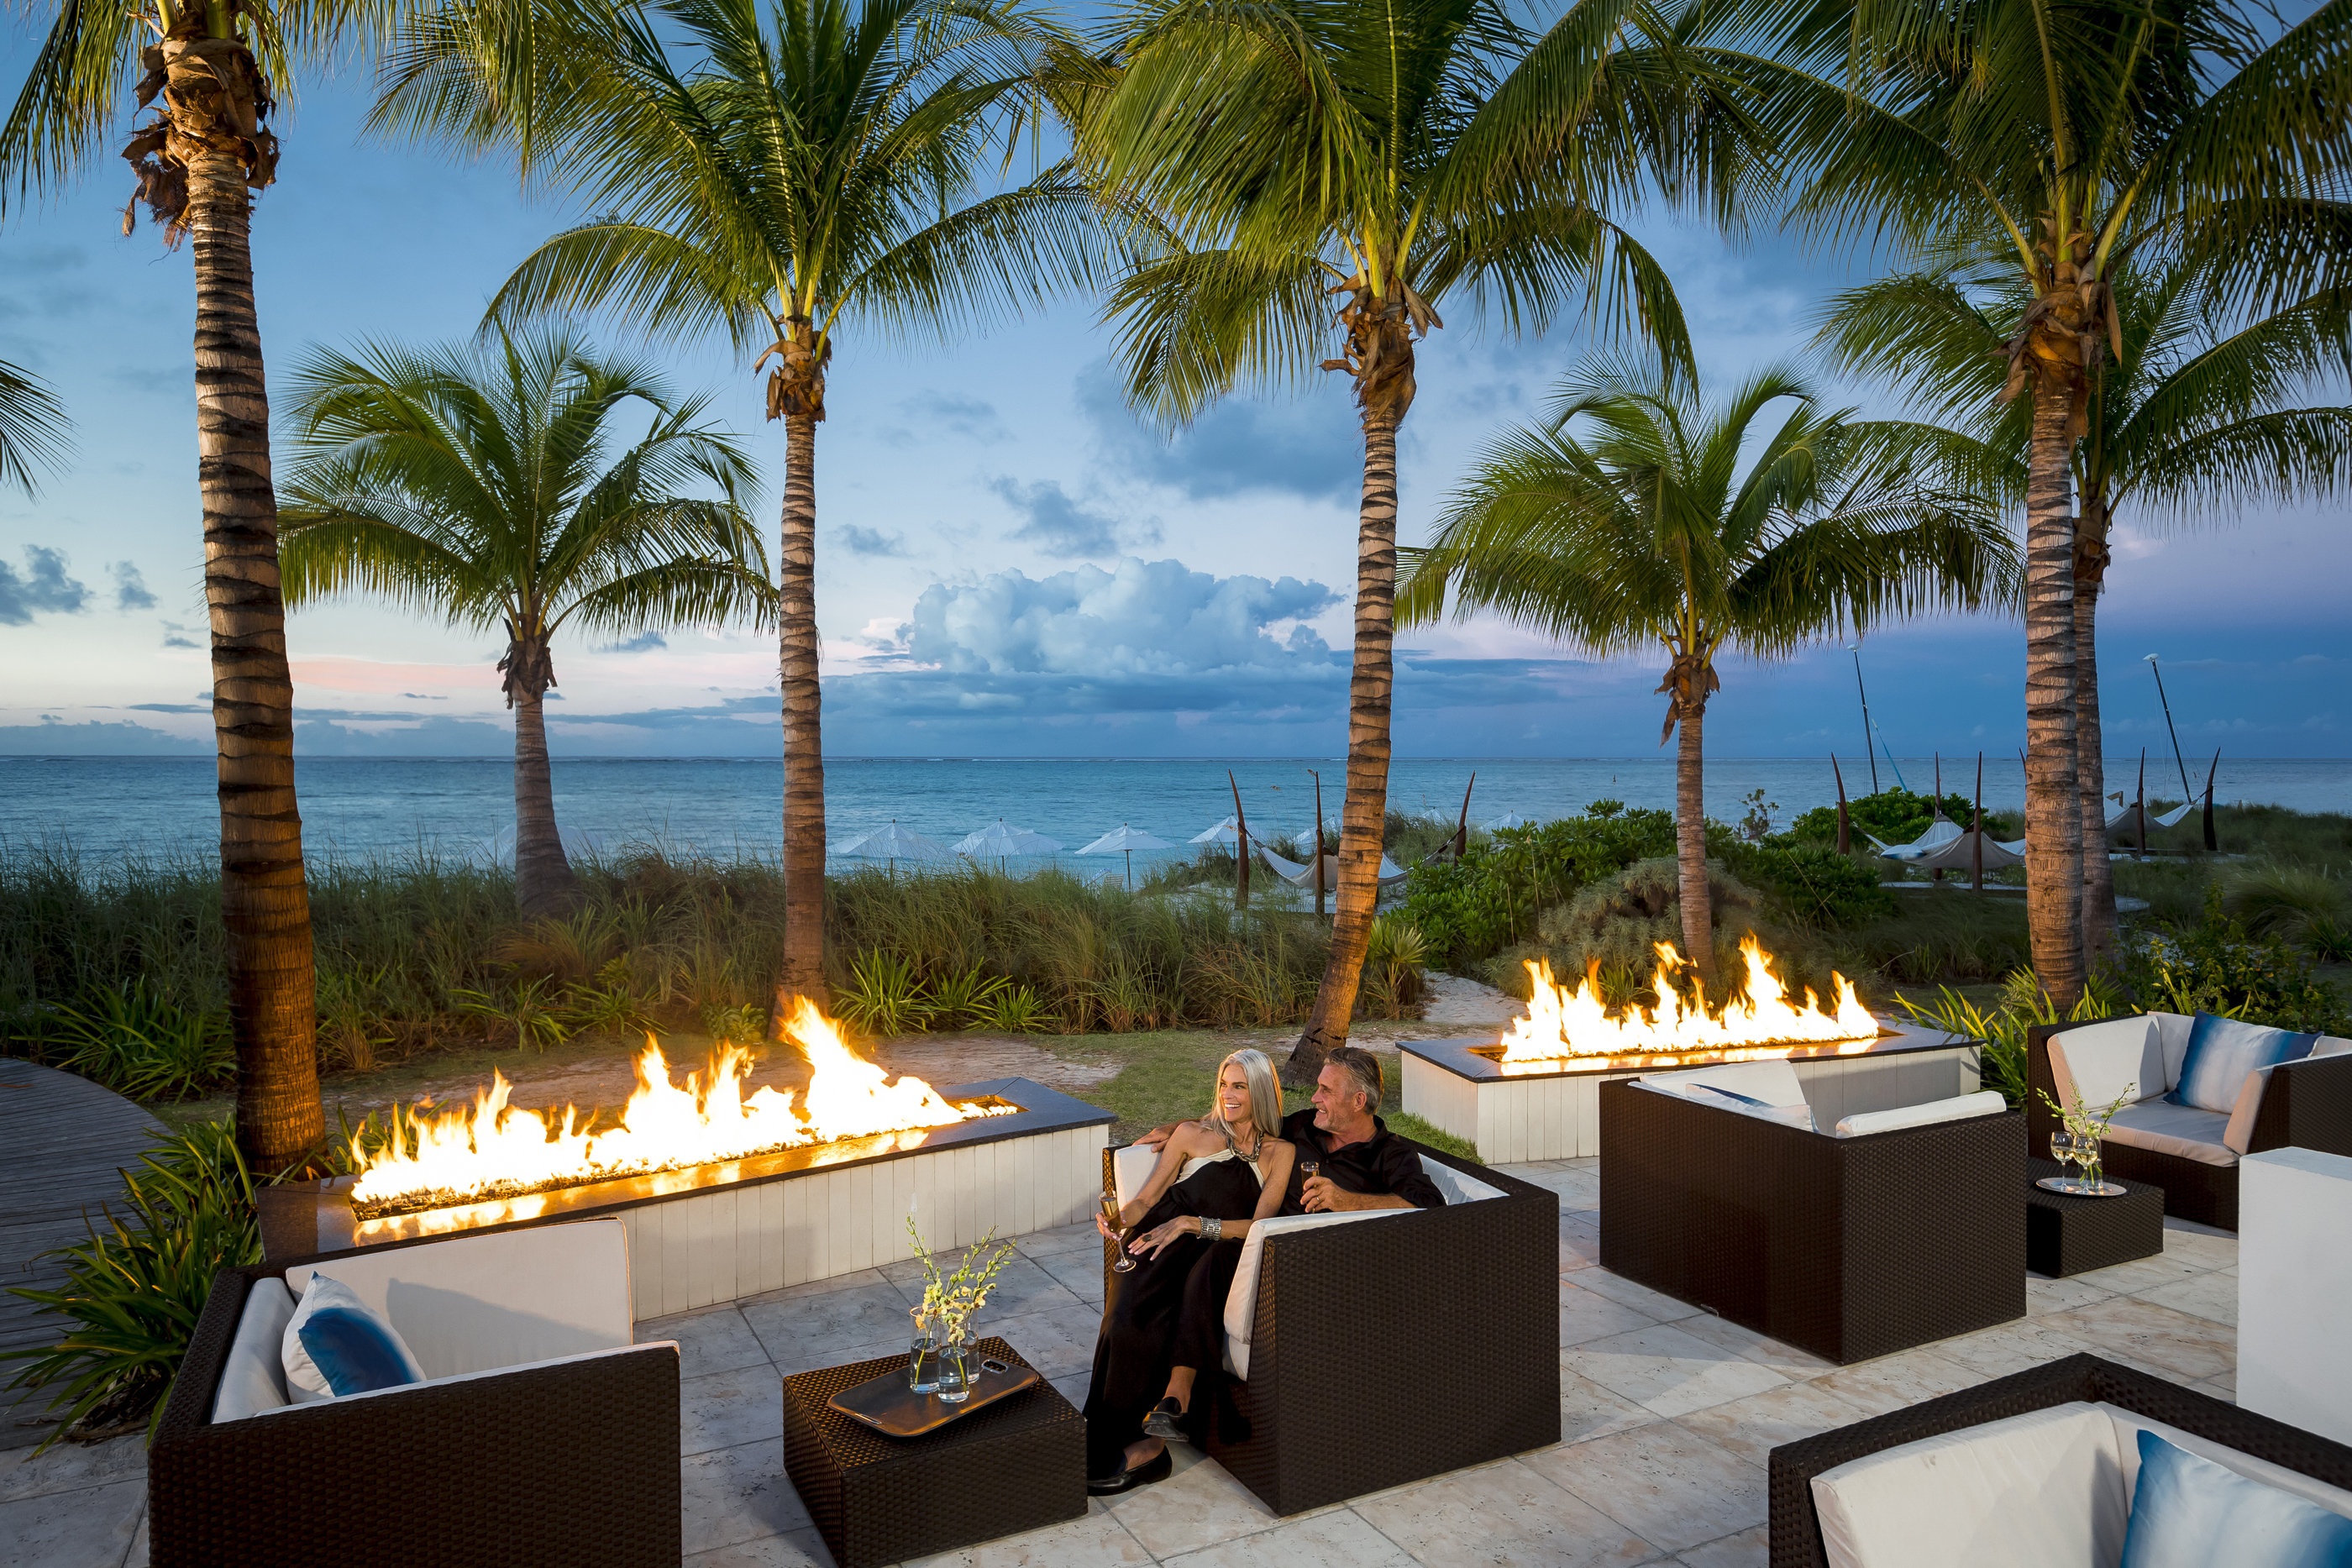 Beaches Resort Turks and Caicos (Steve Sanacore/PA)